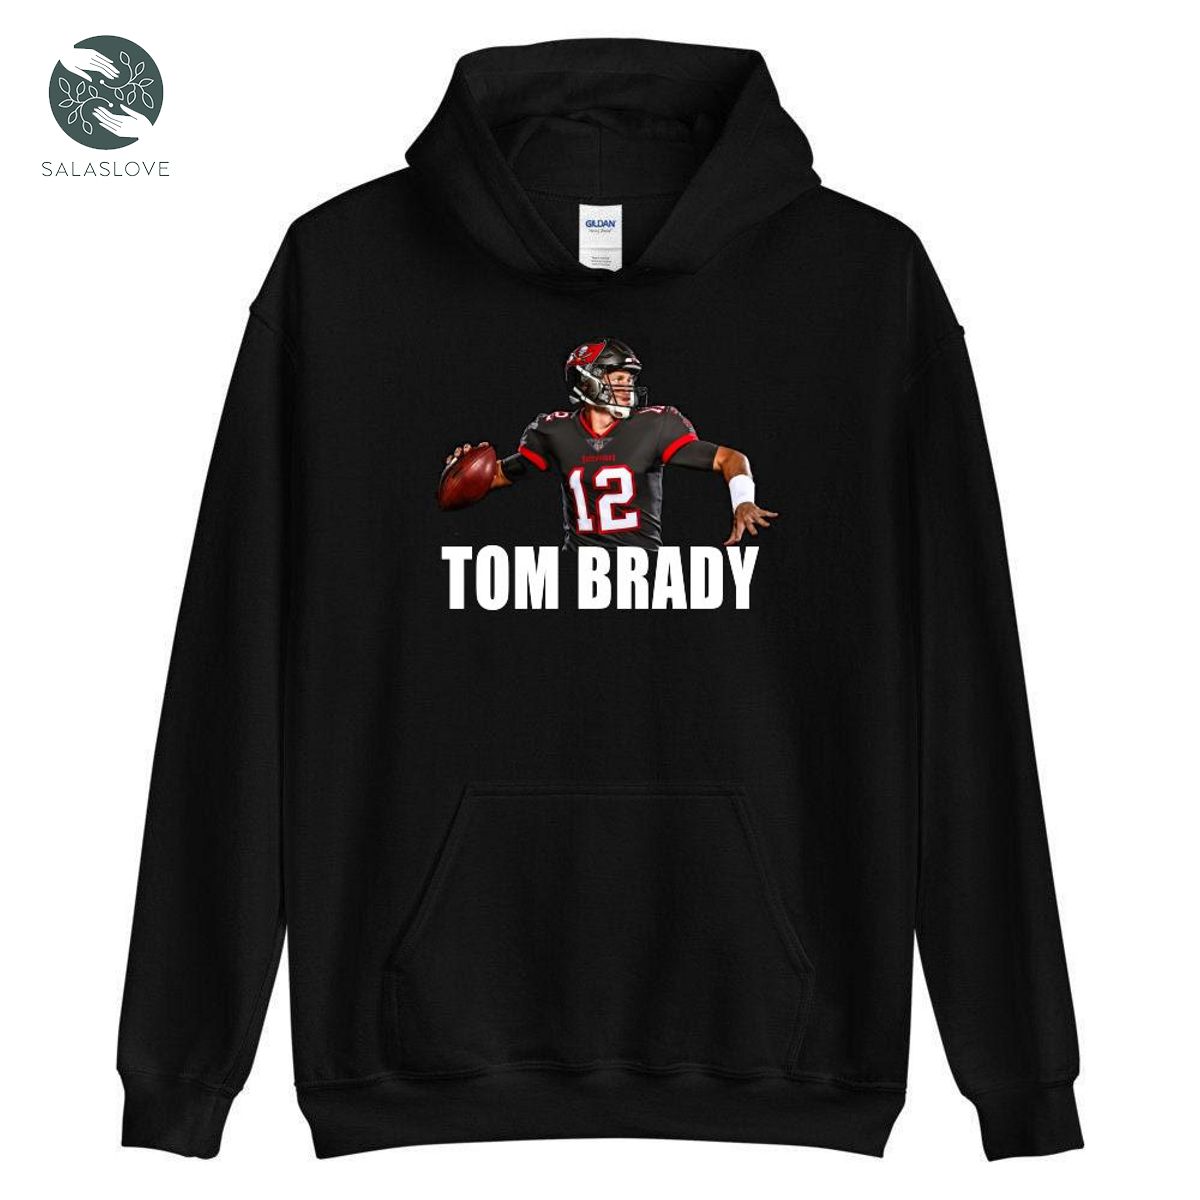 Tom Brady Vintage 90s Bootleg Shirt Gift for Football Fan